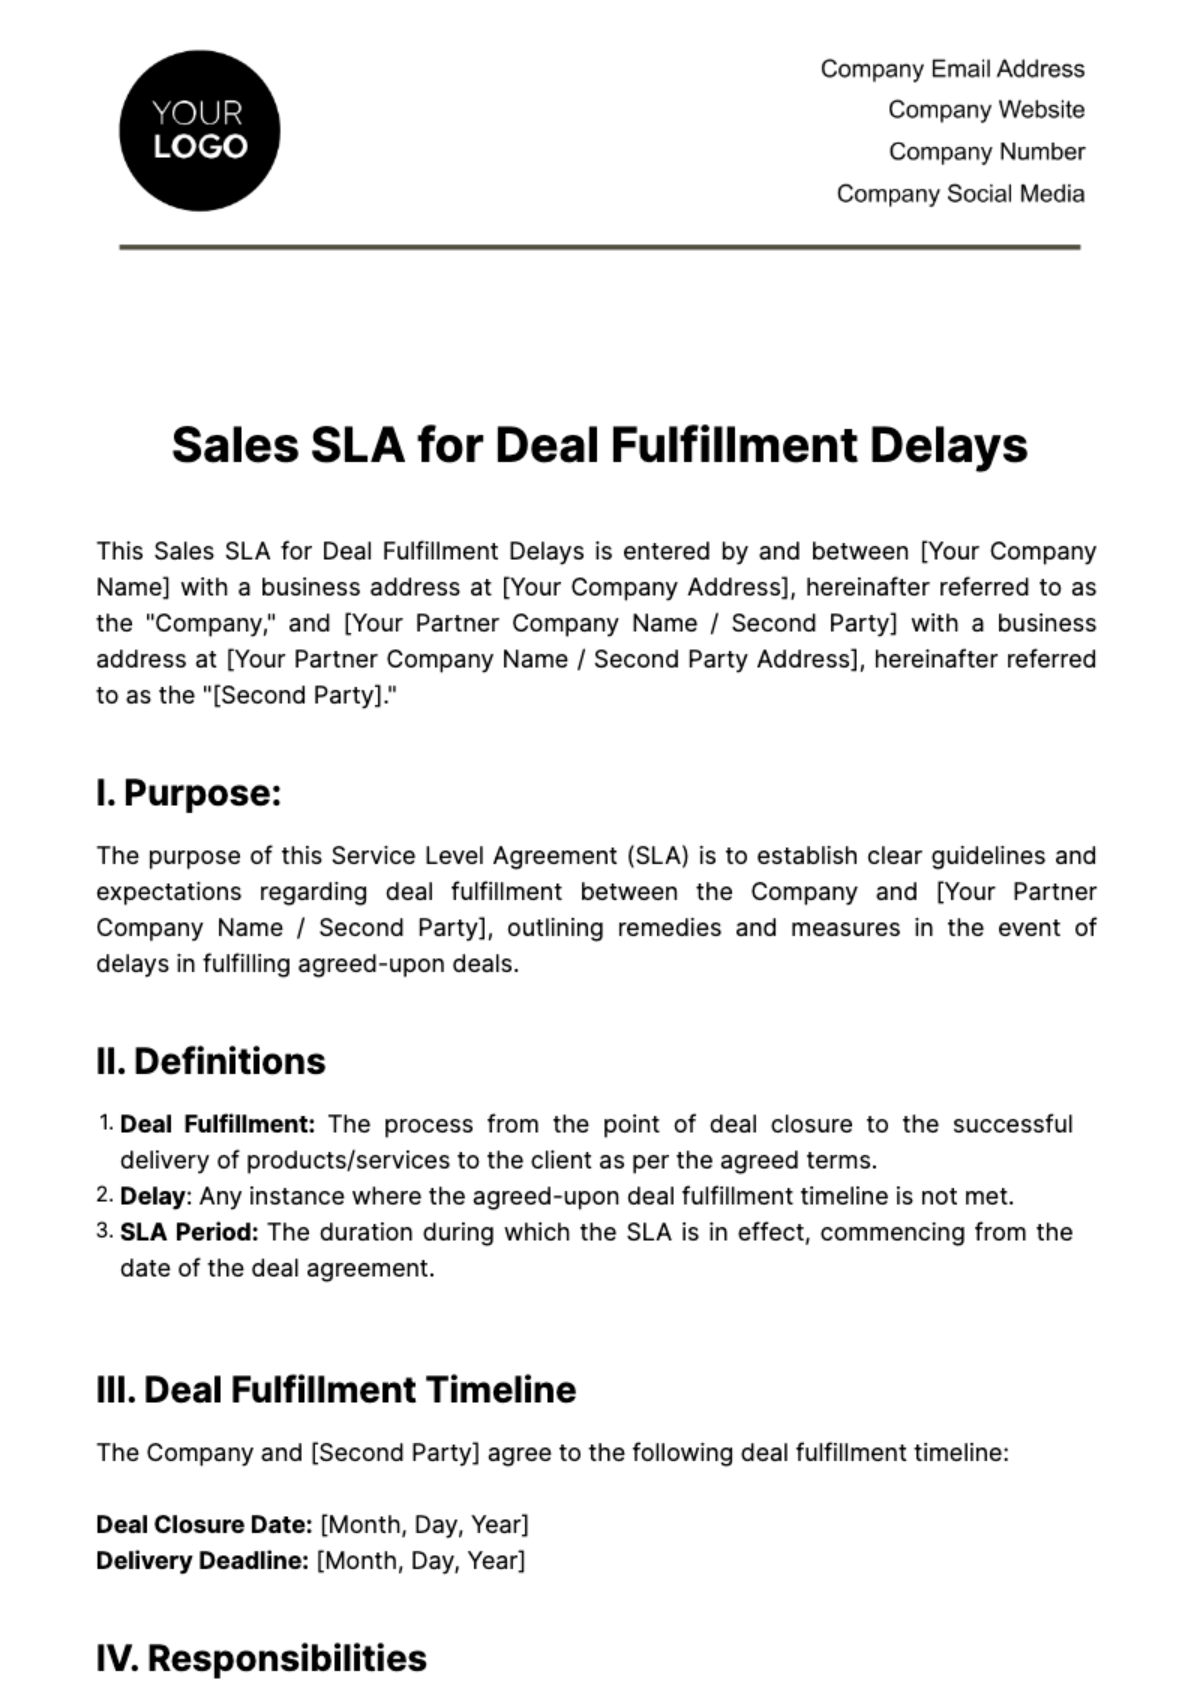 Sales SLA for Deal Fulfillment Delays Template